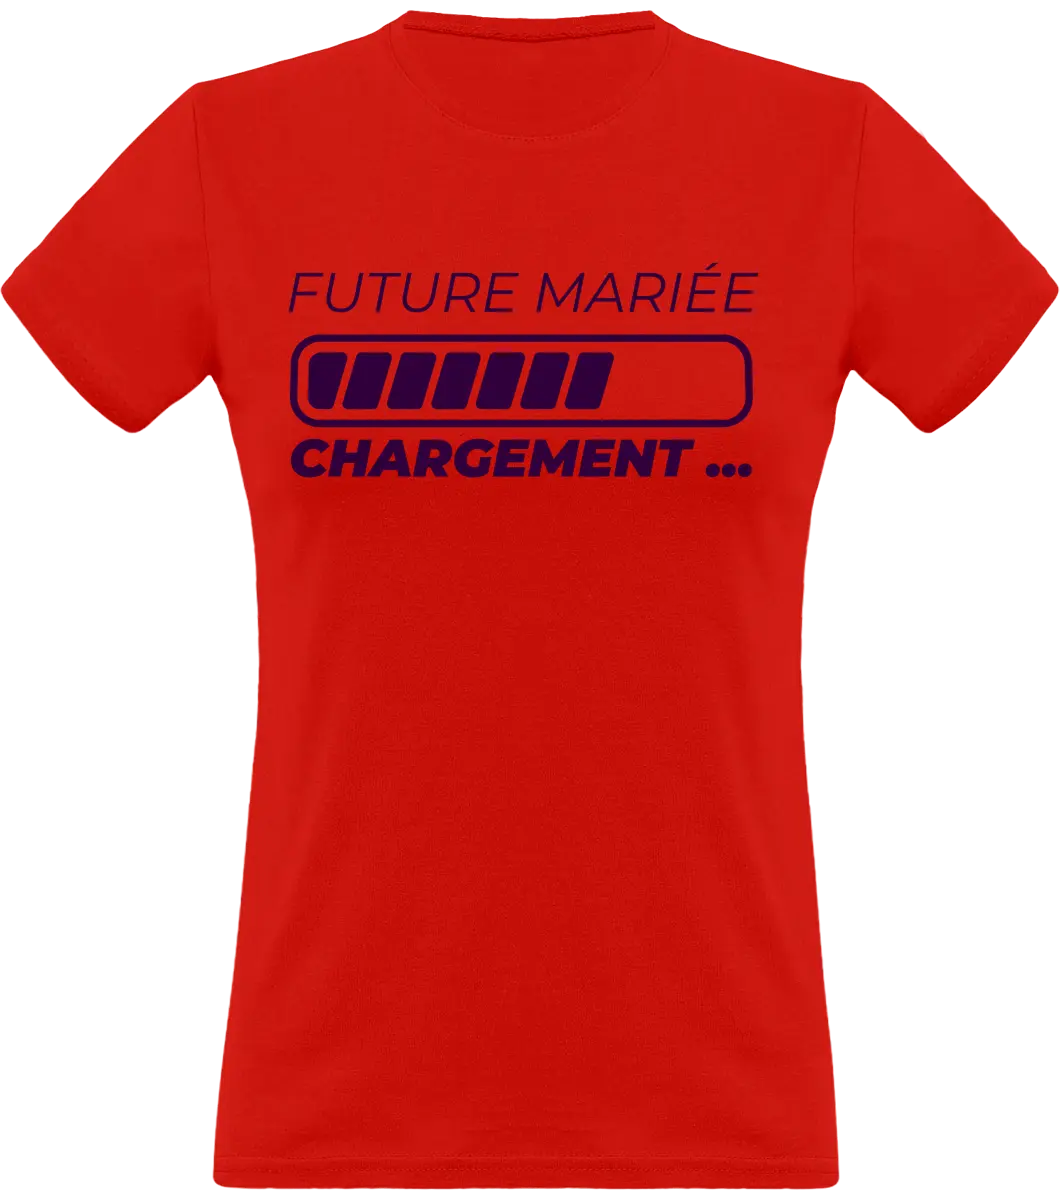 T-shirt EVJF "Future mariée chargement" - French Humour